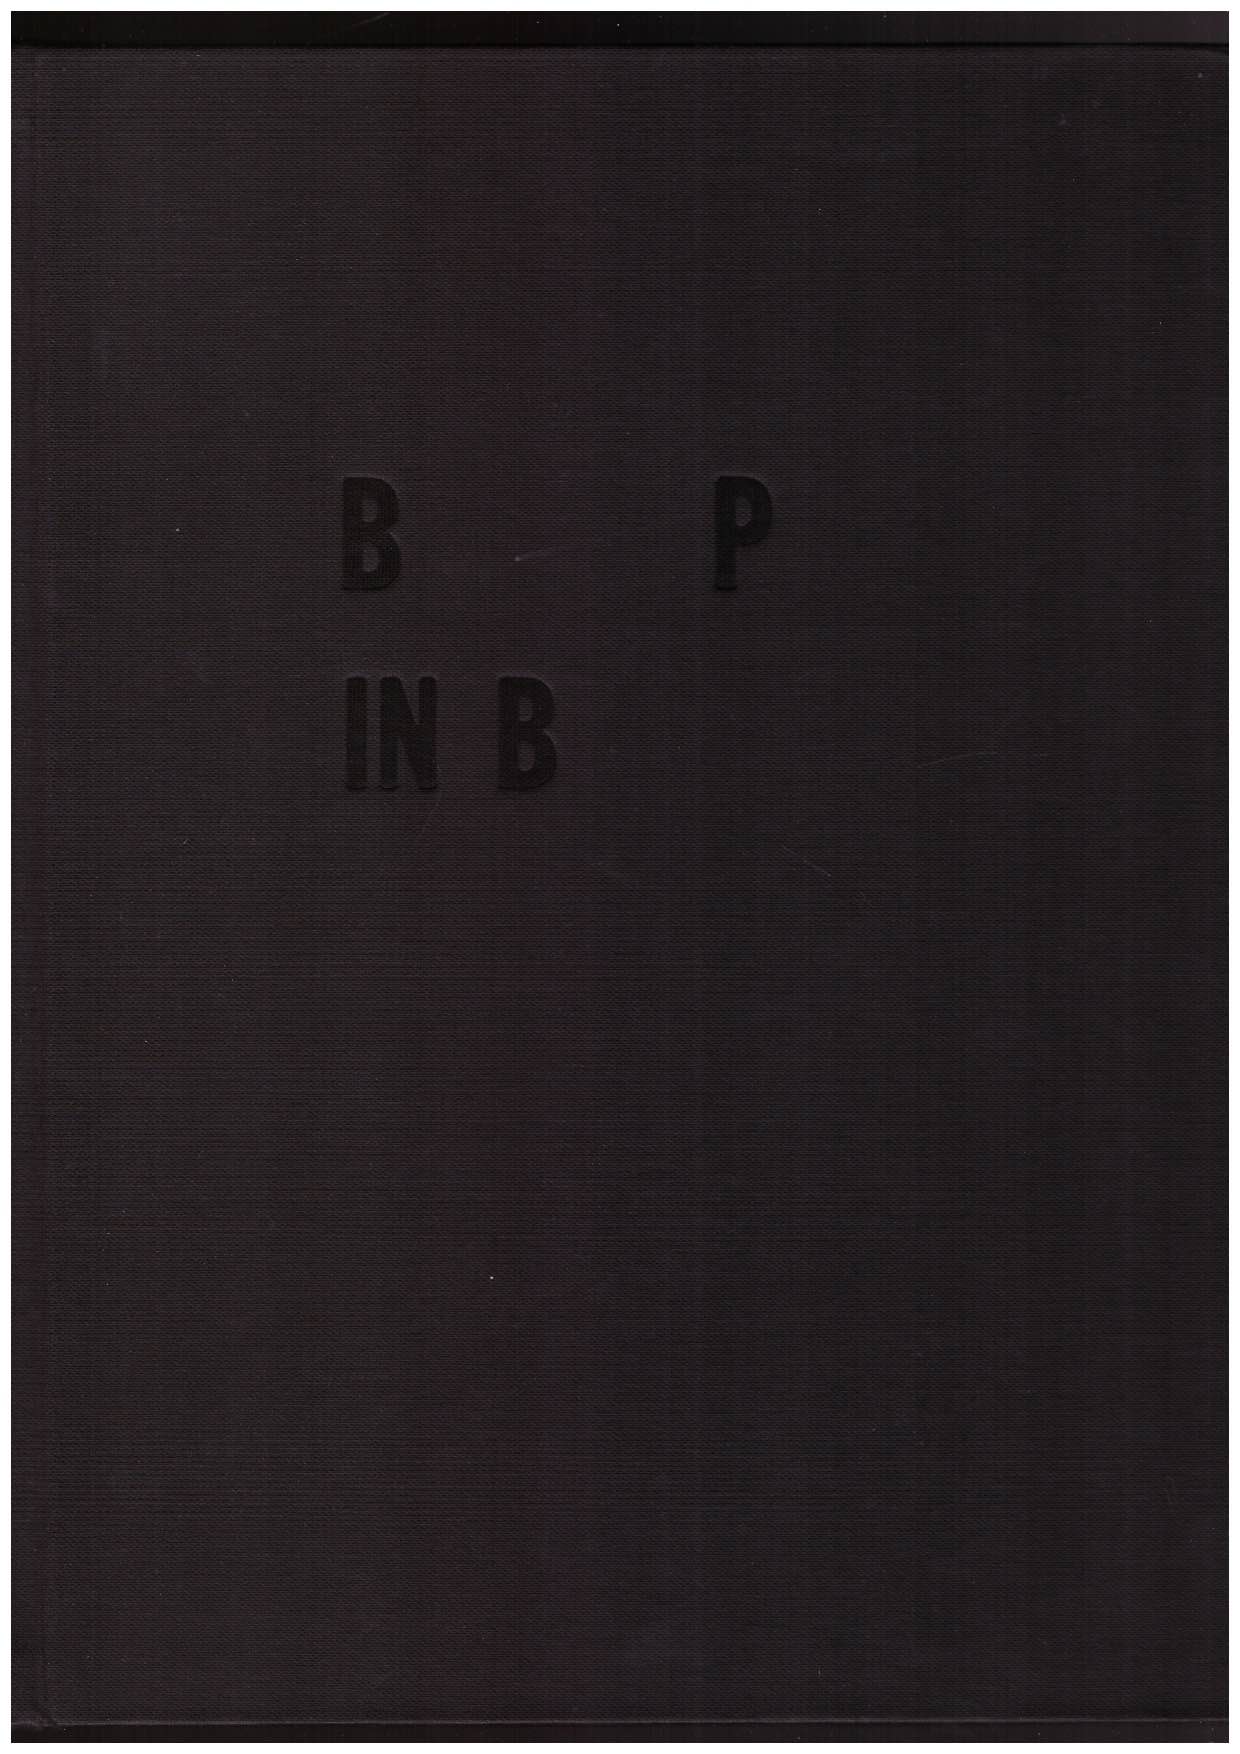 ANON. - BP in B